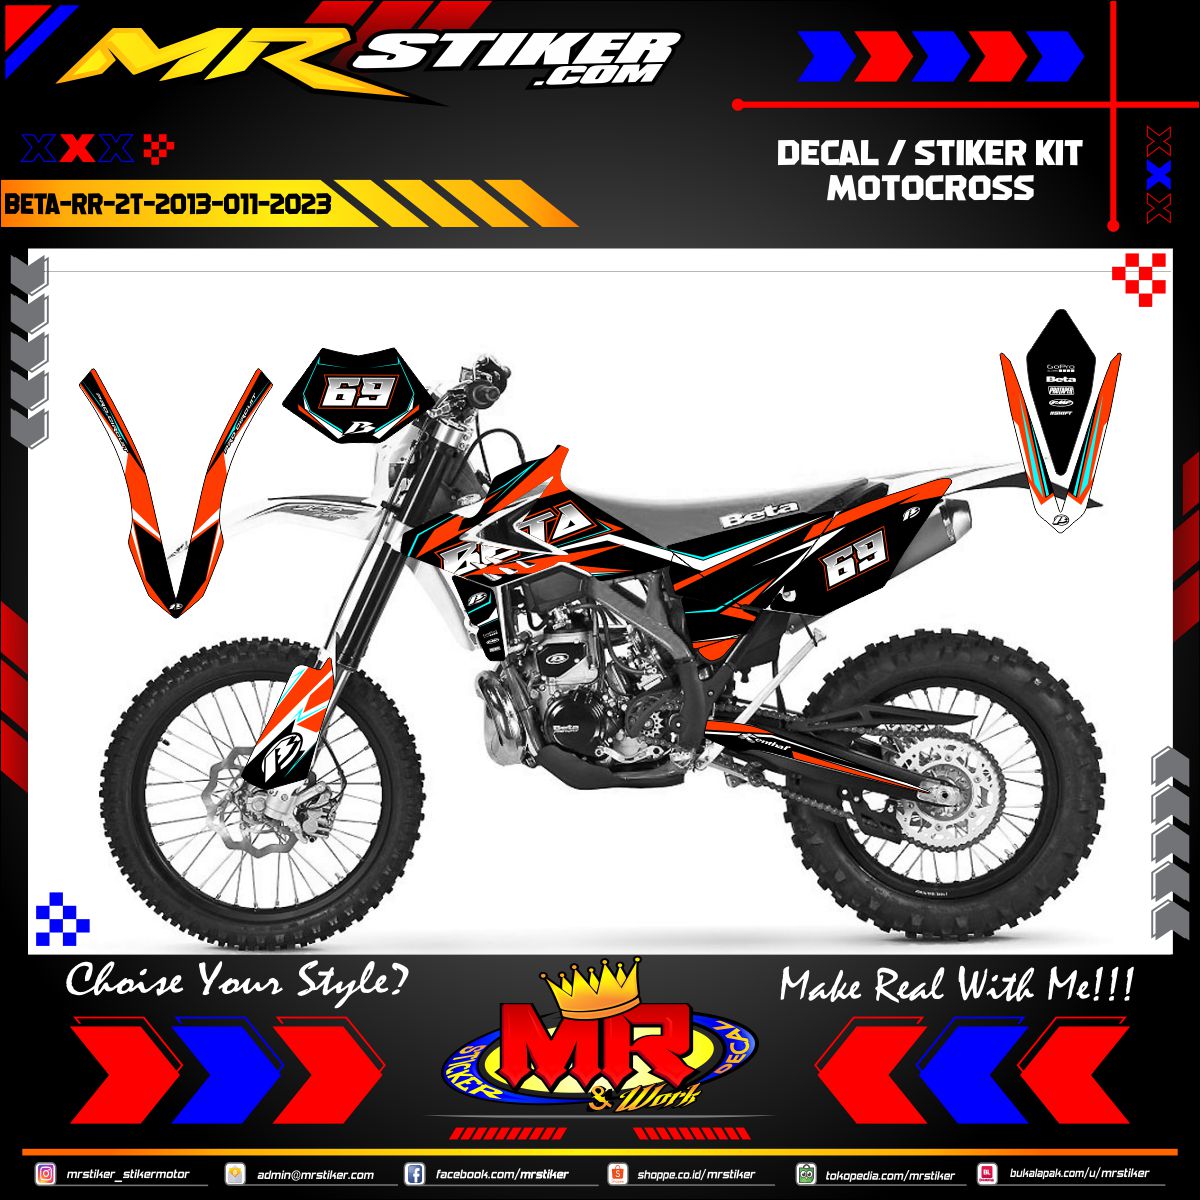 Stiker motor decal Motocross Beta RR 2T 2013 Orange Race Track Graphic Trail Wrap